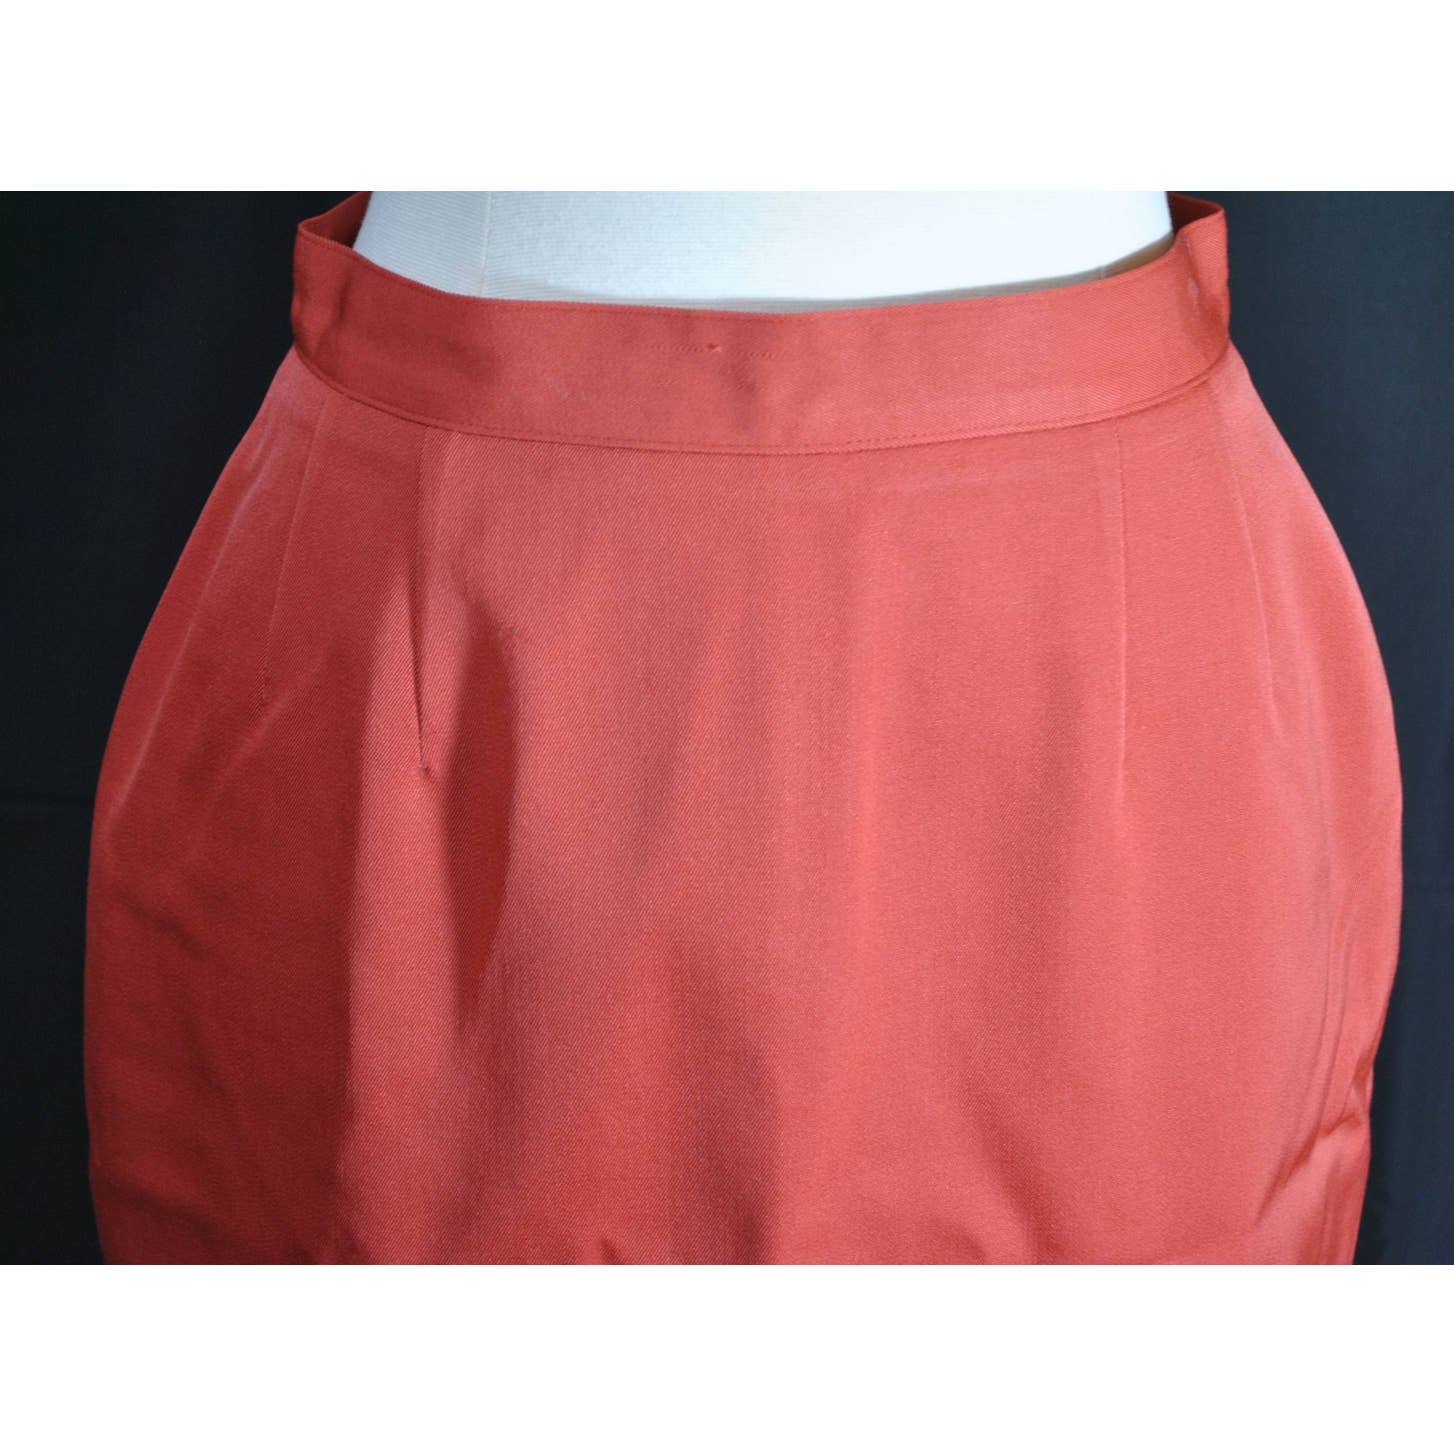 Vintage Teenflo Paris Orange Knee Length Skirt- M (no size tag)